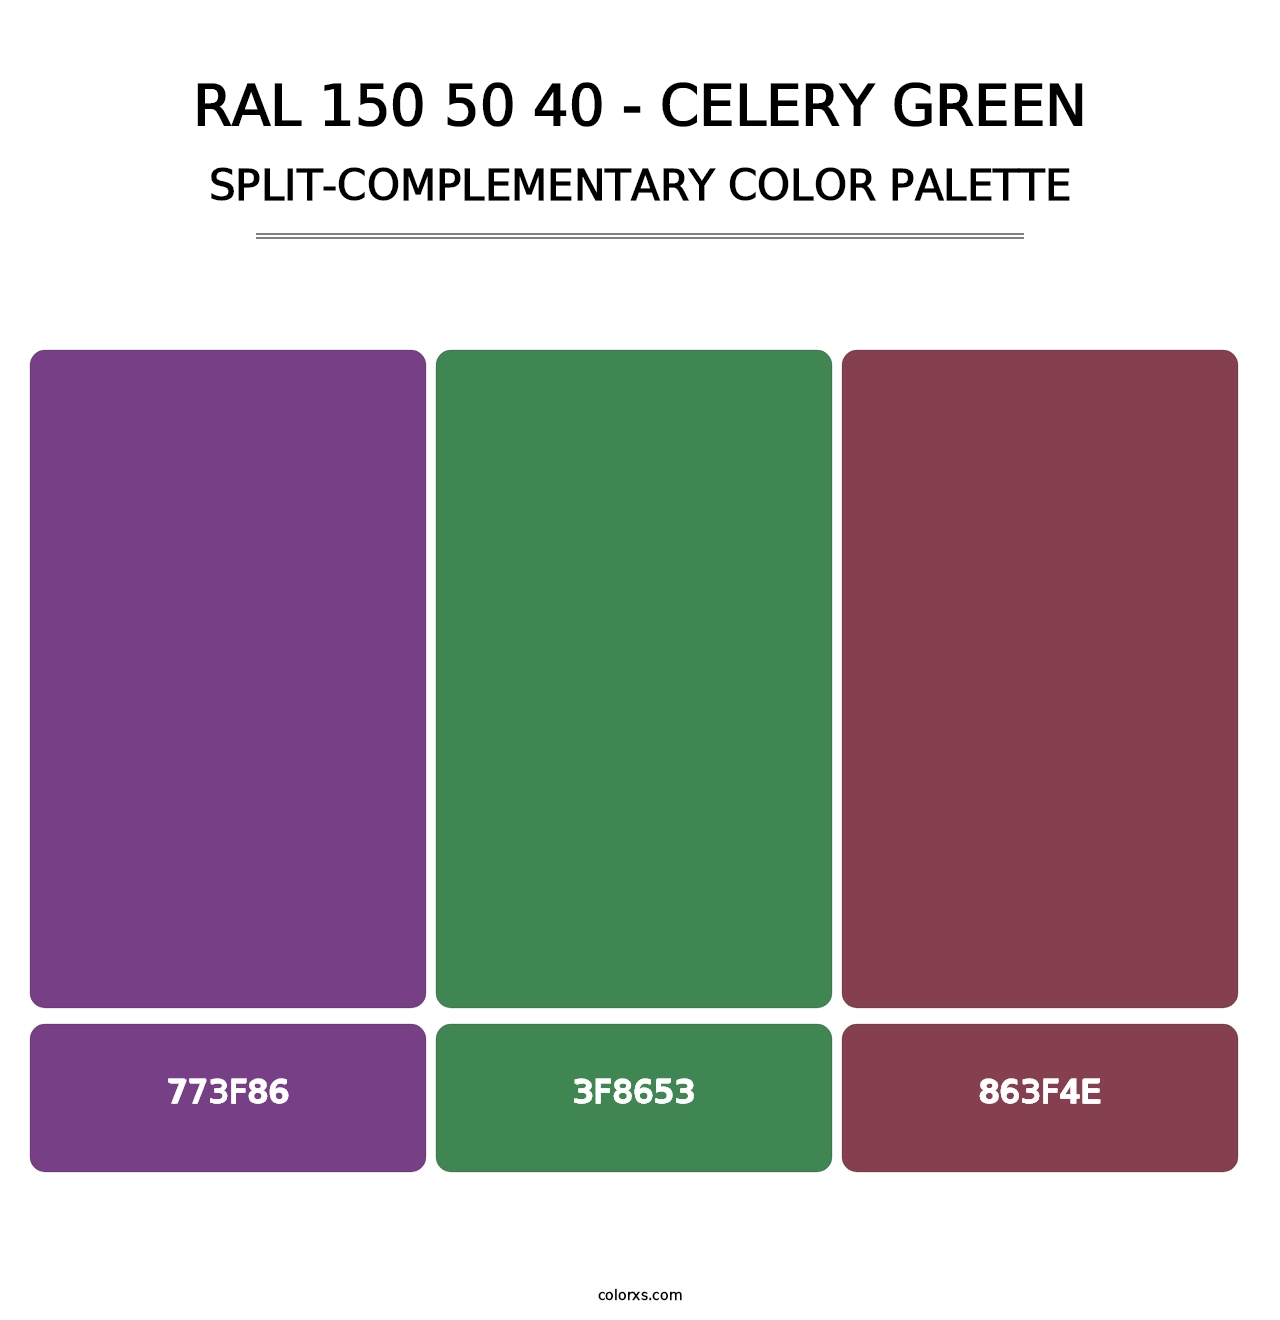 RAL 150 50 40 - Celery Green - Split-Complementary Color Palette